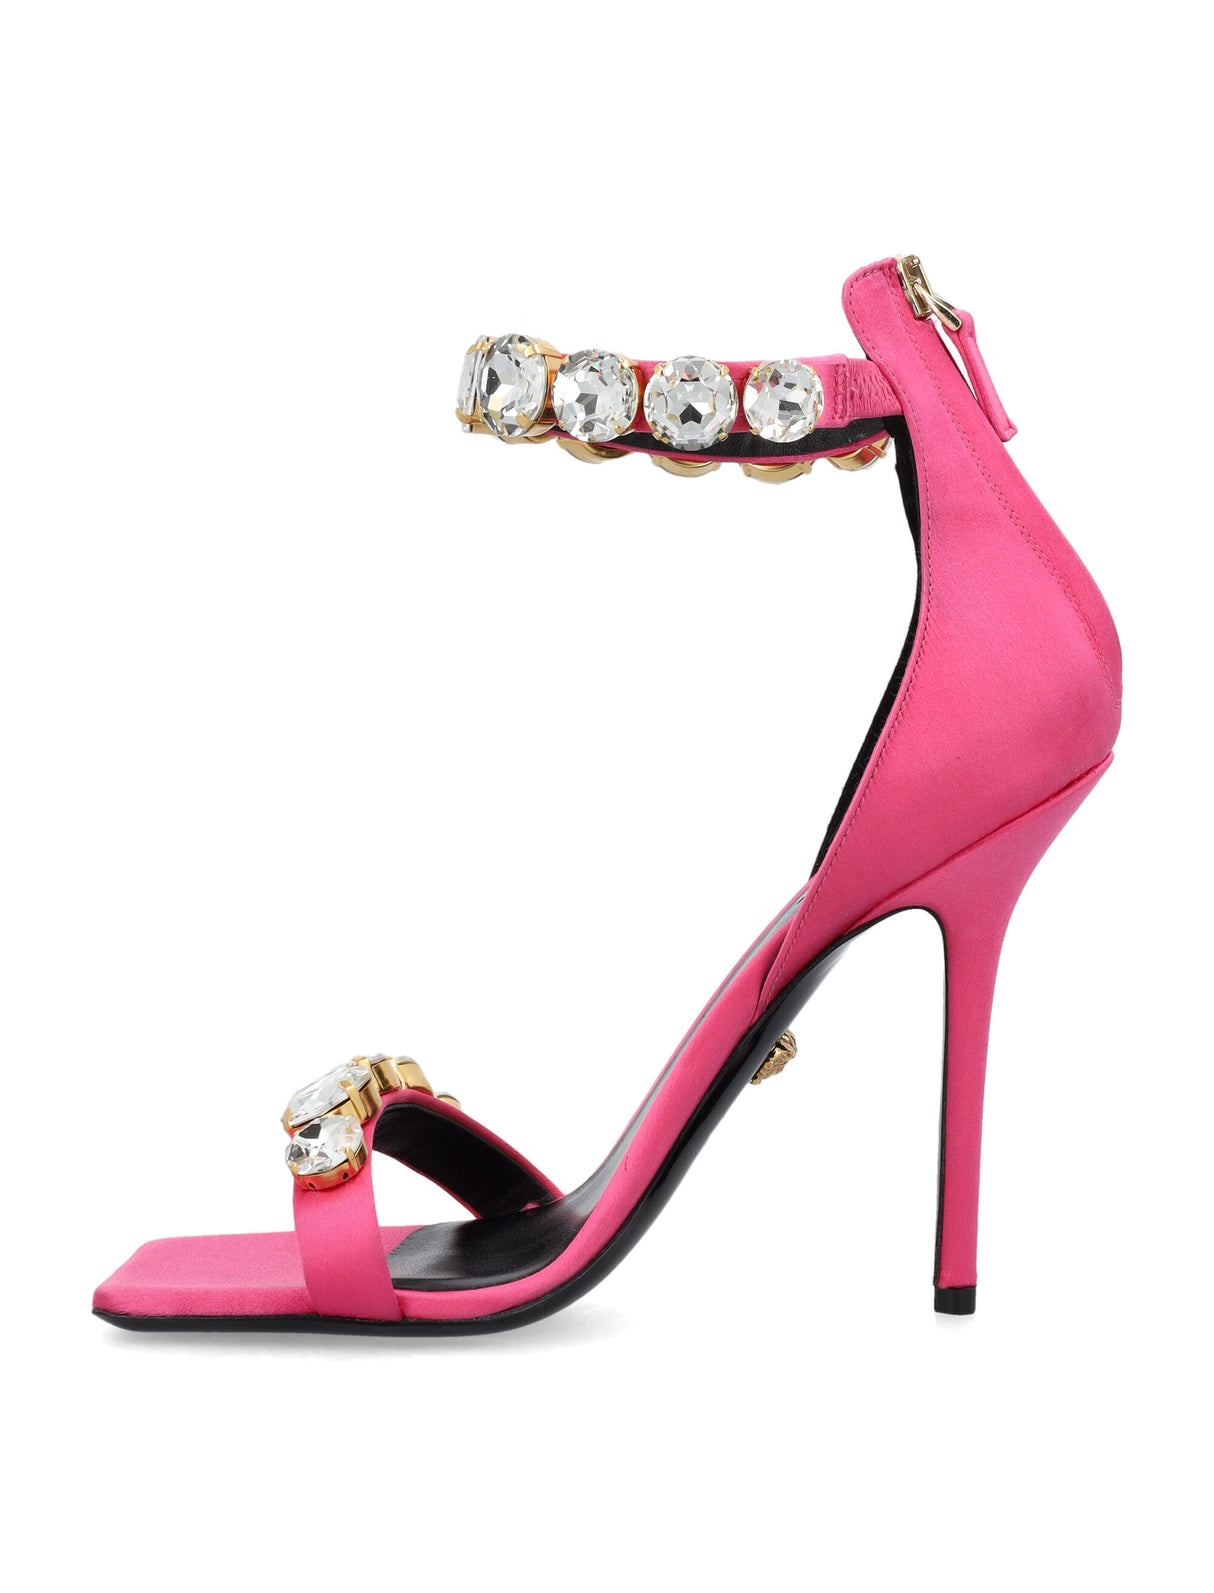 Elegant Crystal Satin Sandals in Pink for Women